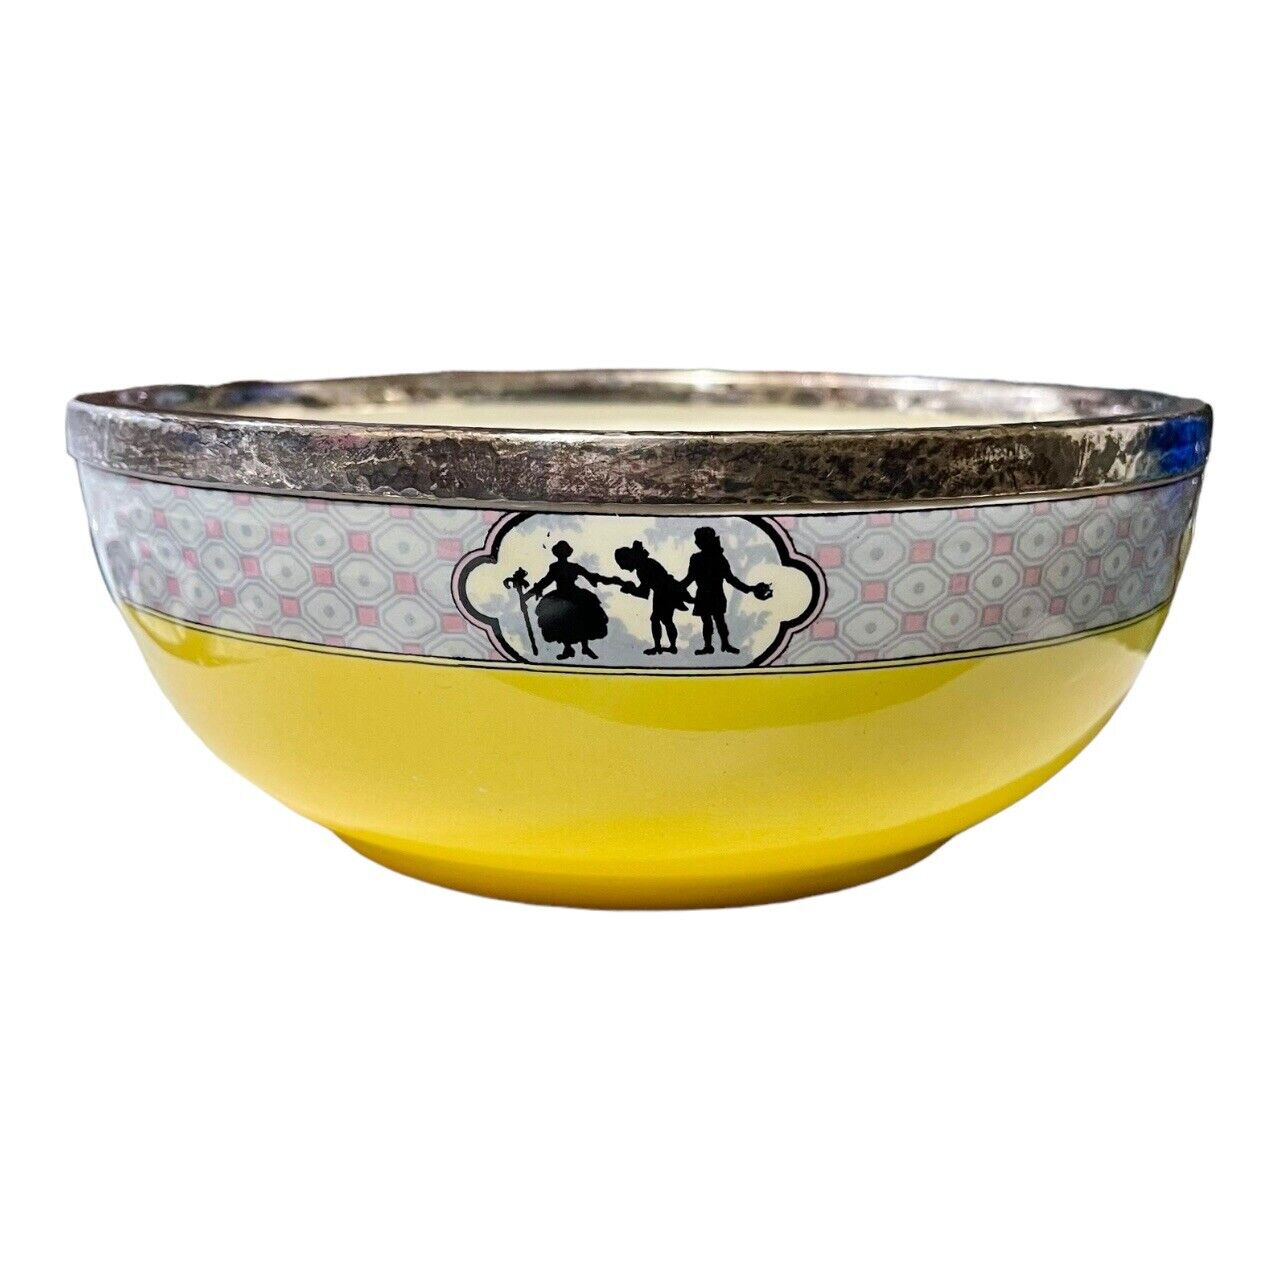 Baker & Co Porcelain Bowl Yellow Silver Rim Victorian Silhouette England Antique